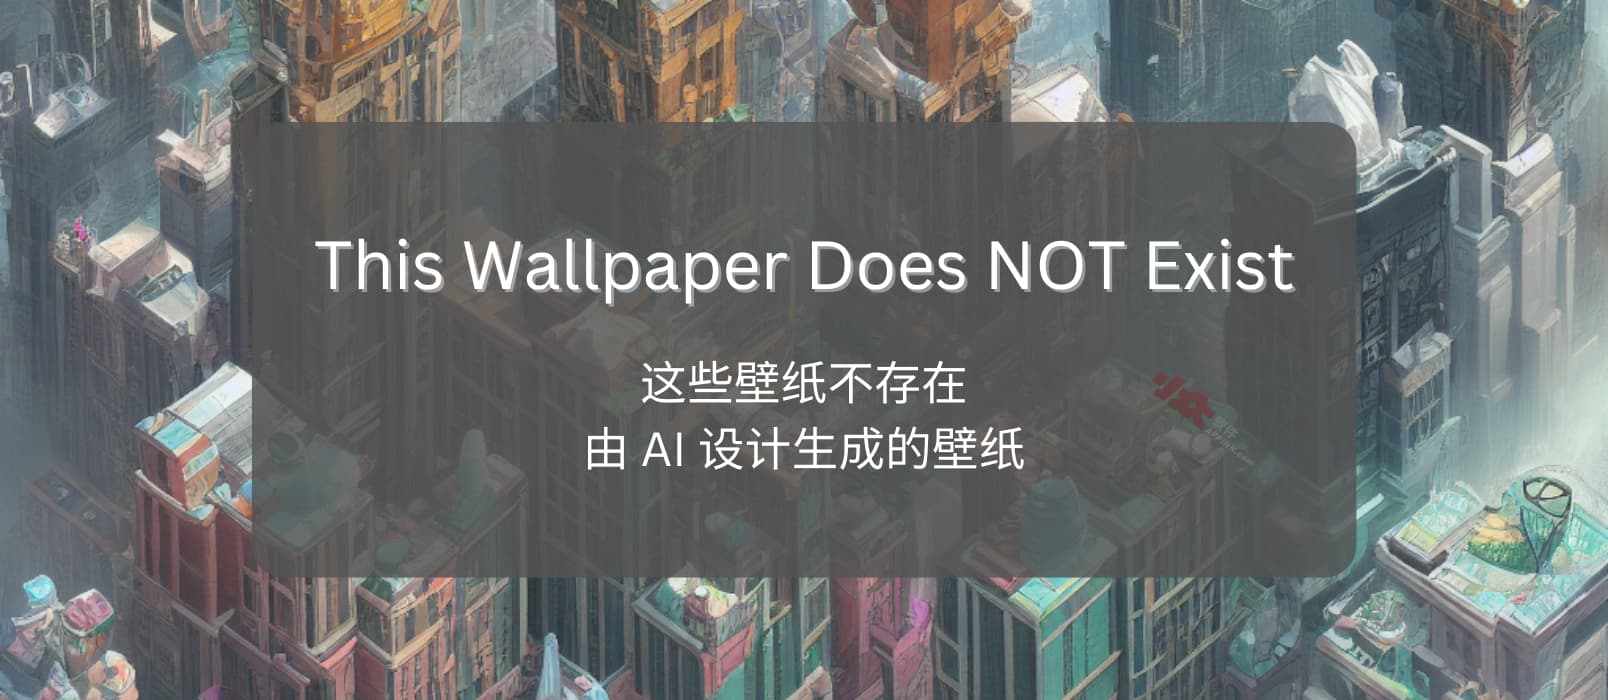 This Wallpaper Does NOT Exist – 这些壁纸不存在。由 AI 设计生成的壁纸